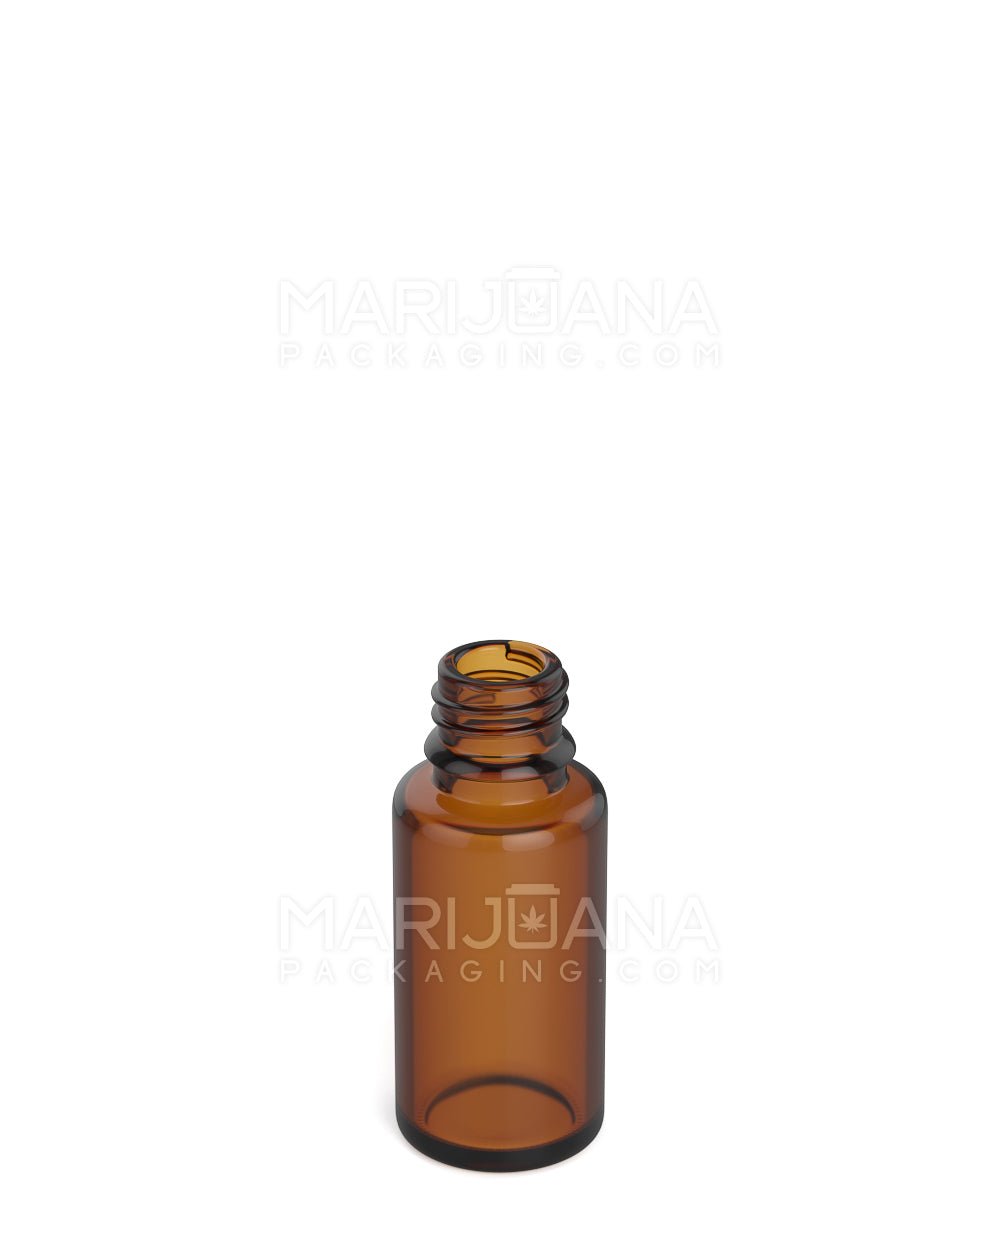 POLLEN GEAR | Sharp Shoulder Glass Tincture Dropper Bottles | 15mL - Amber - 252 Count - 2